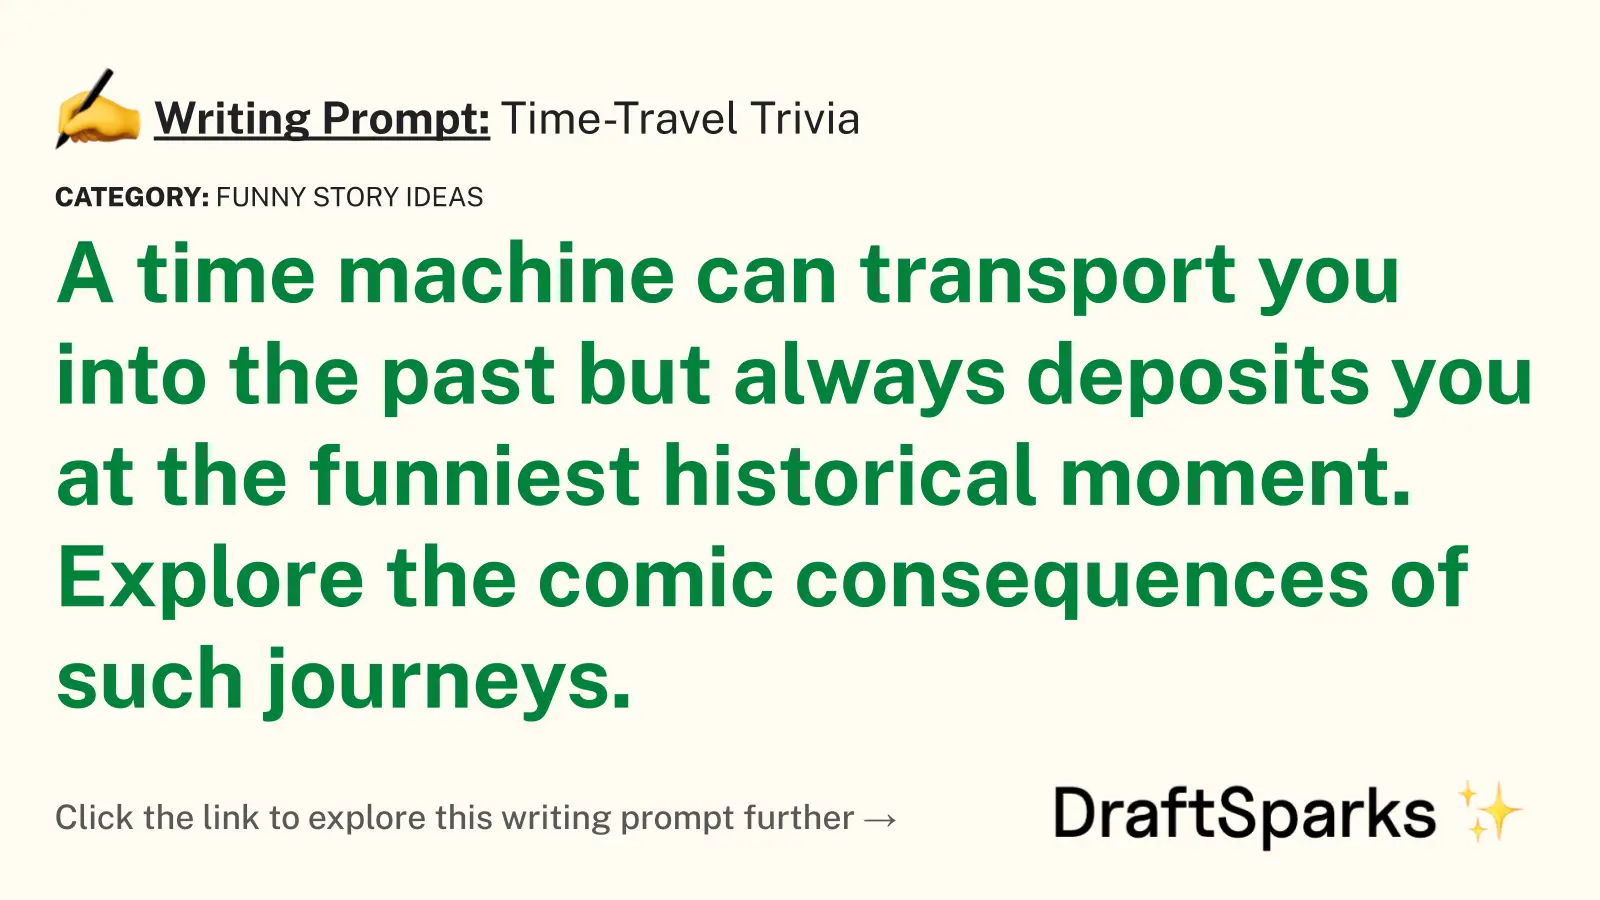 Time-Travel Trivia